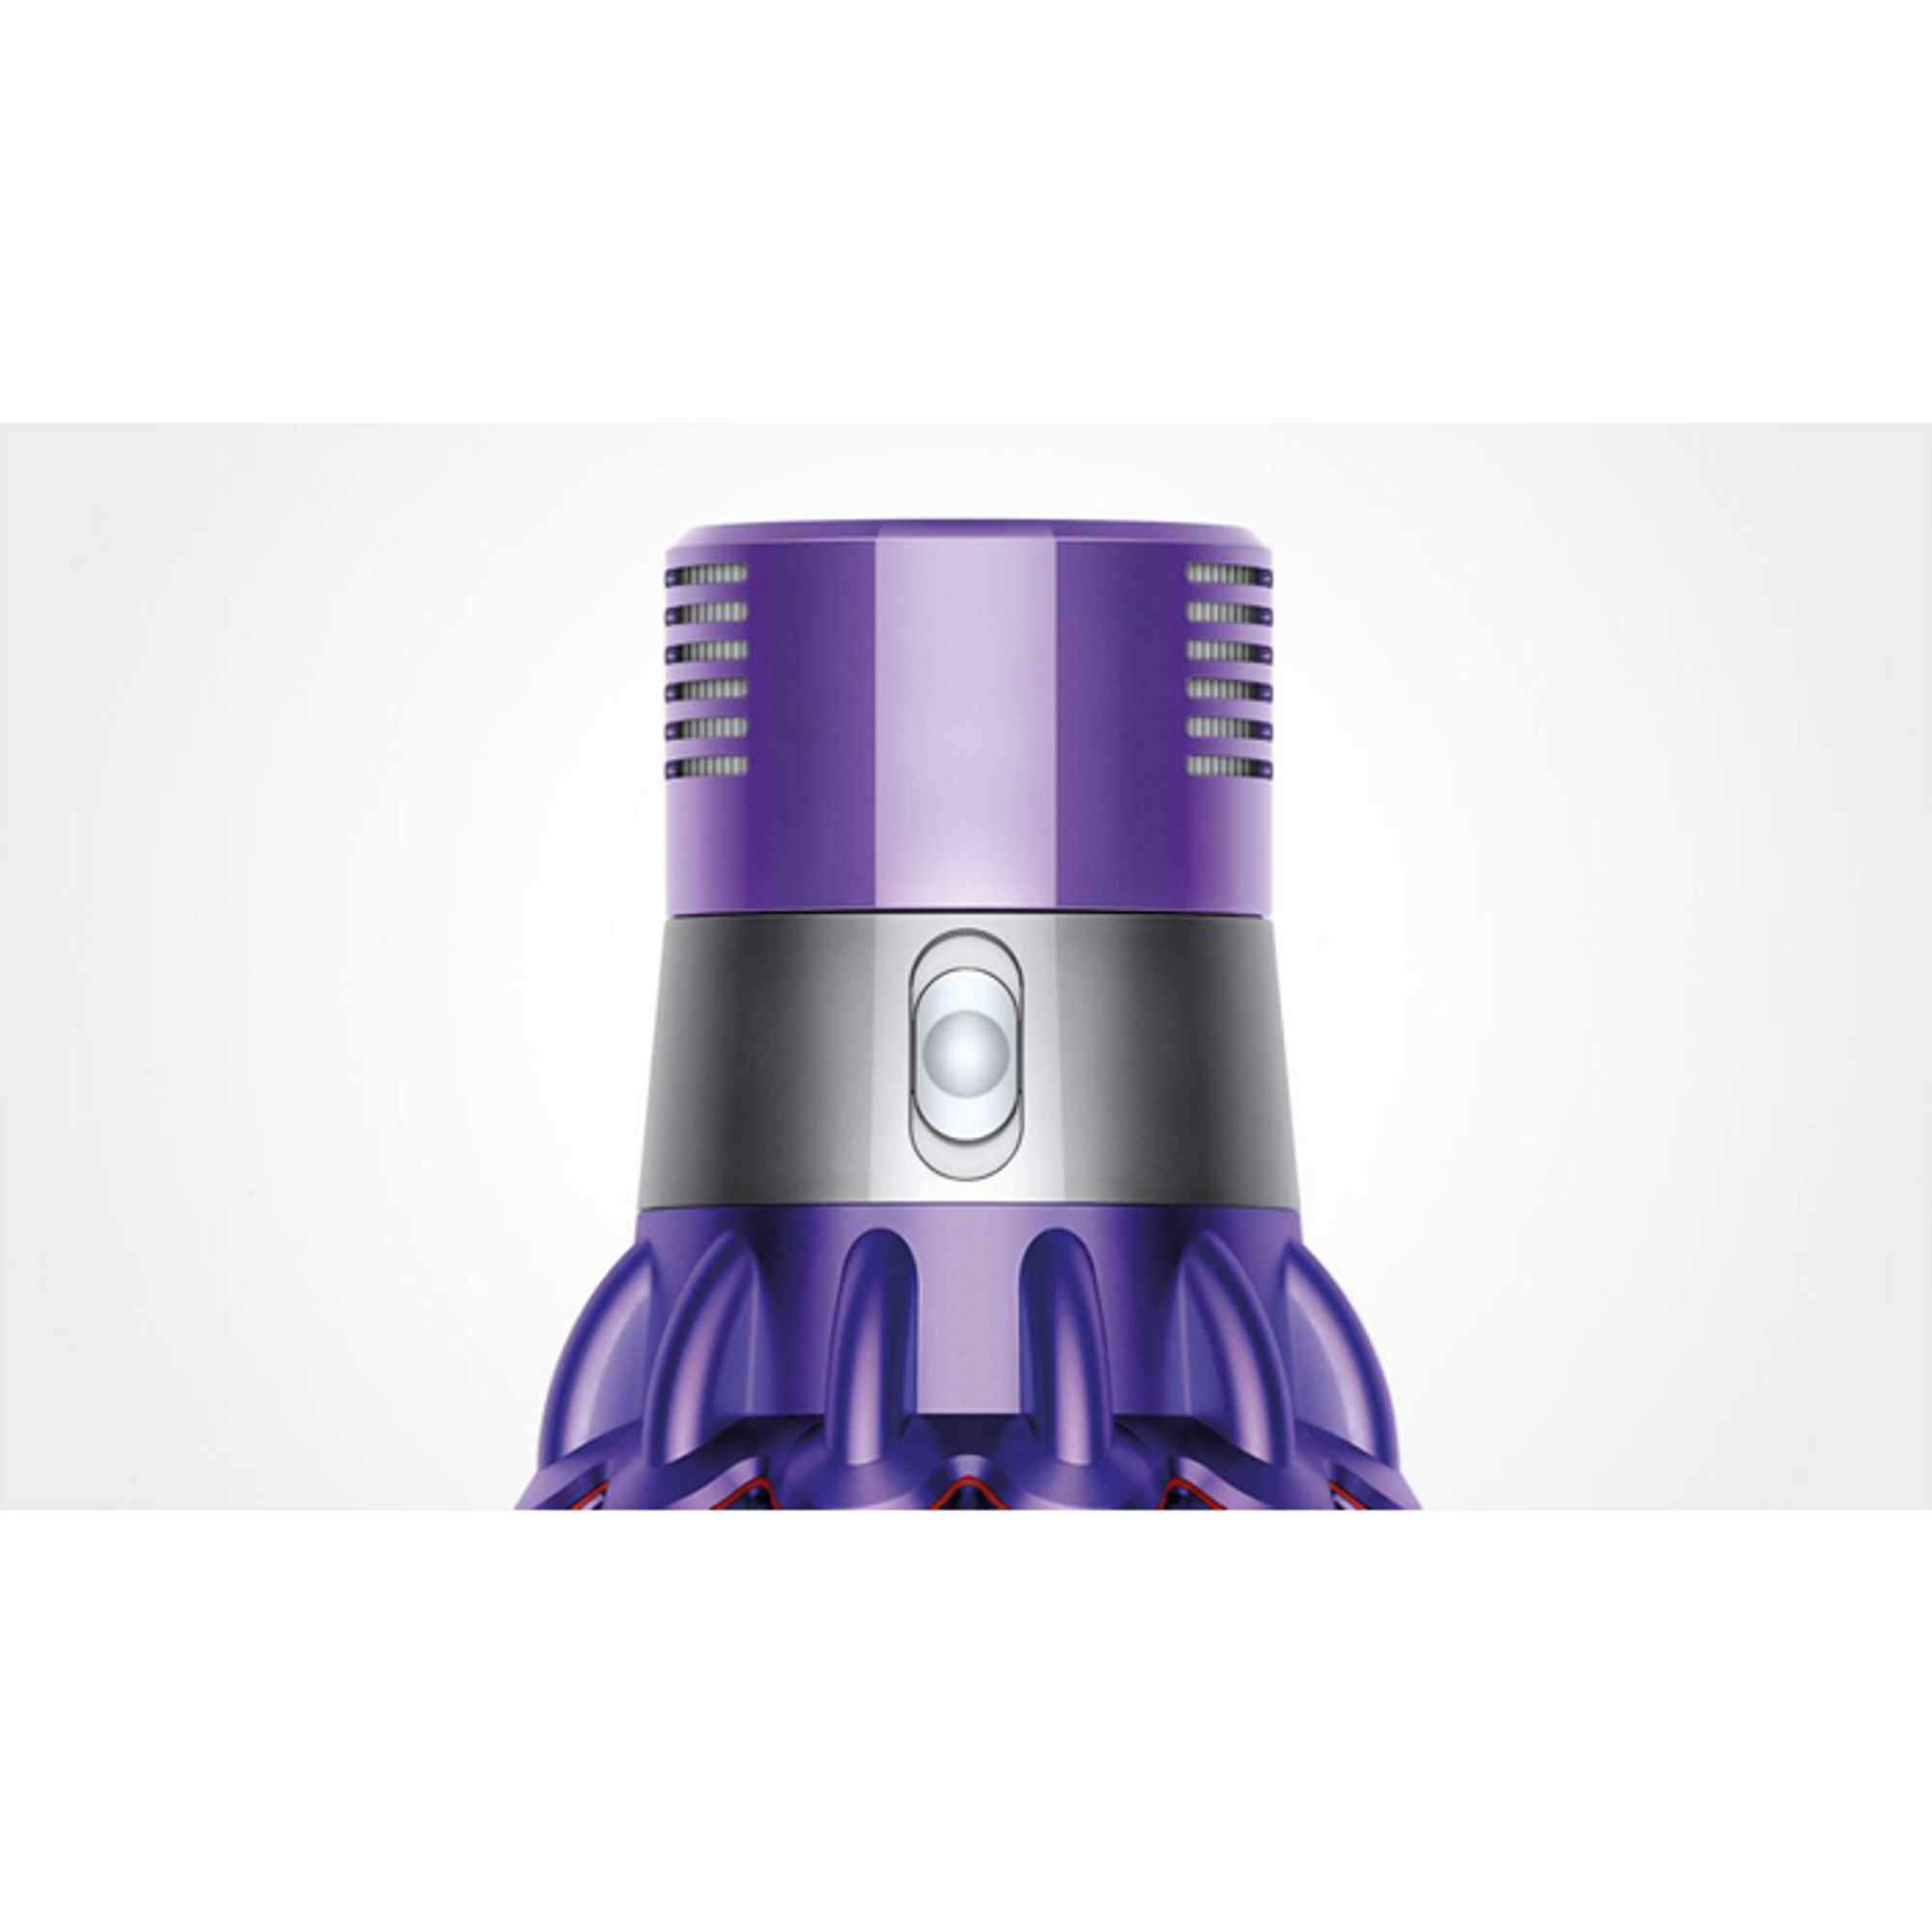 Buy Dyson V10 B Refurbished Cordless Vacuum from Canada at